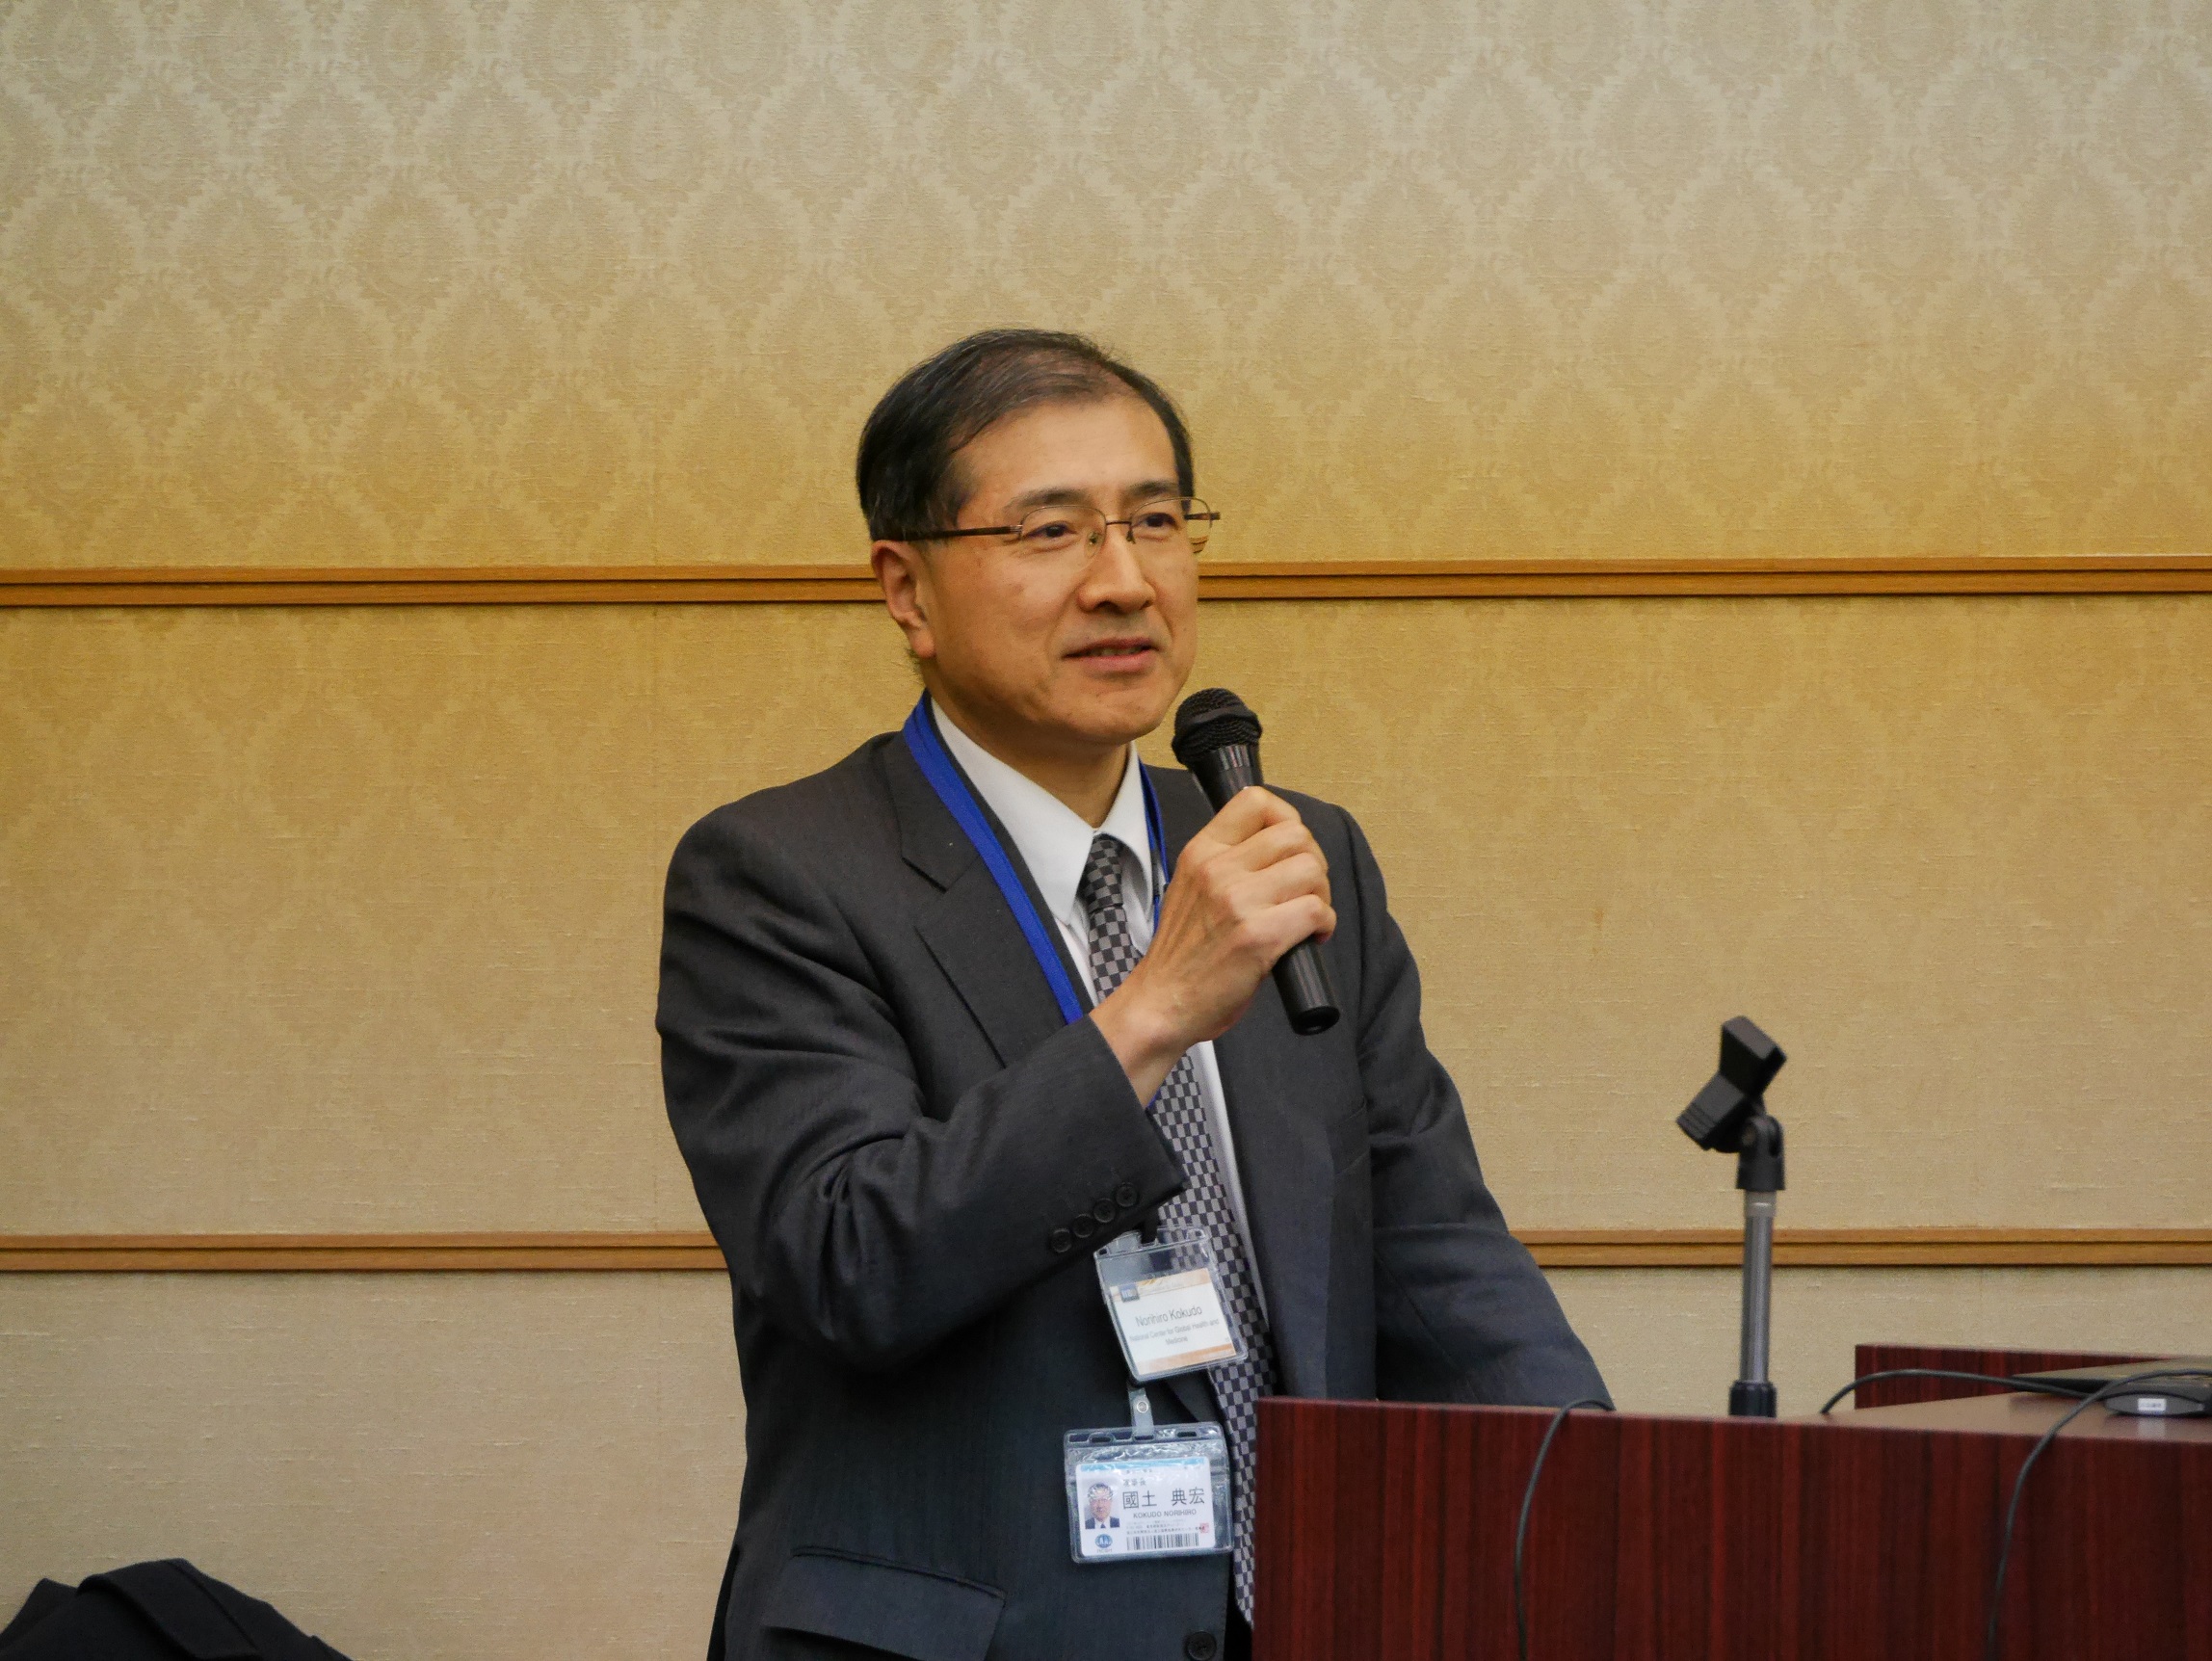 Dr. Kokudo, President of NCGM